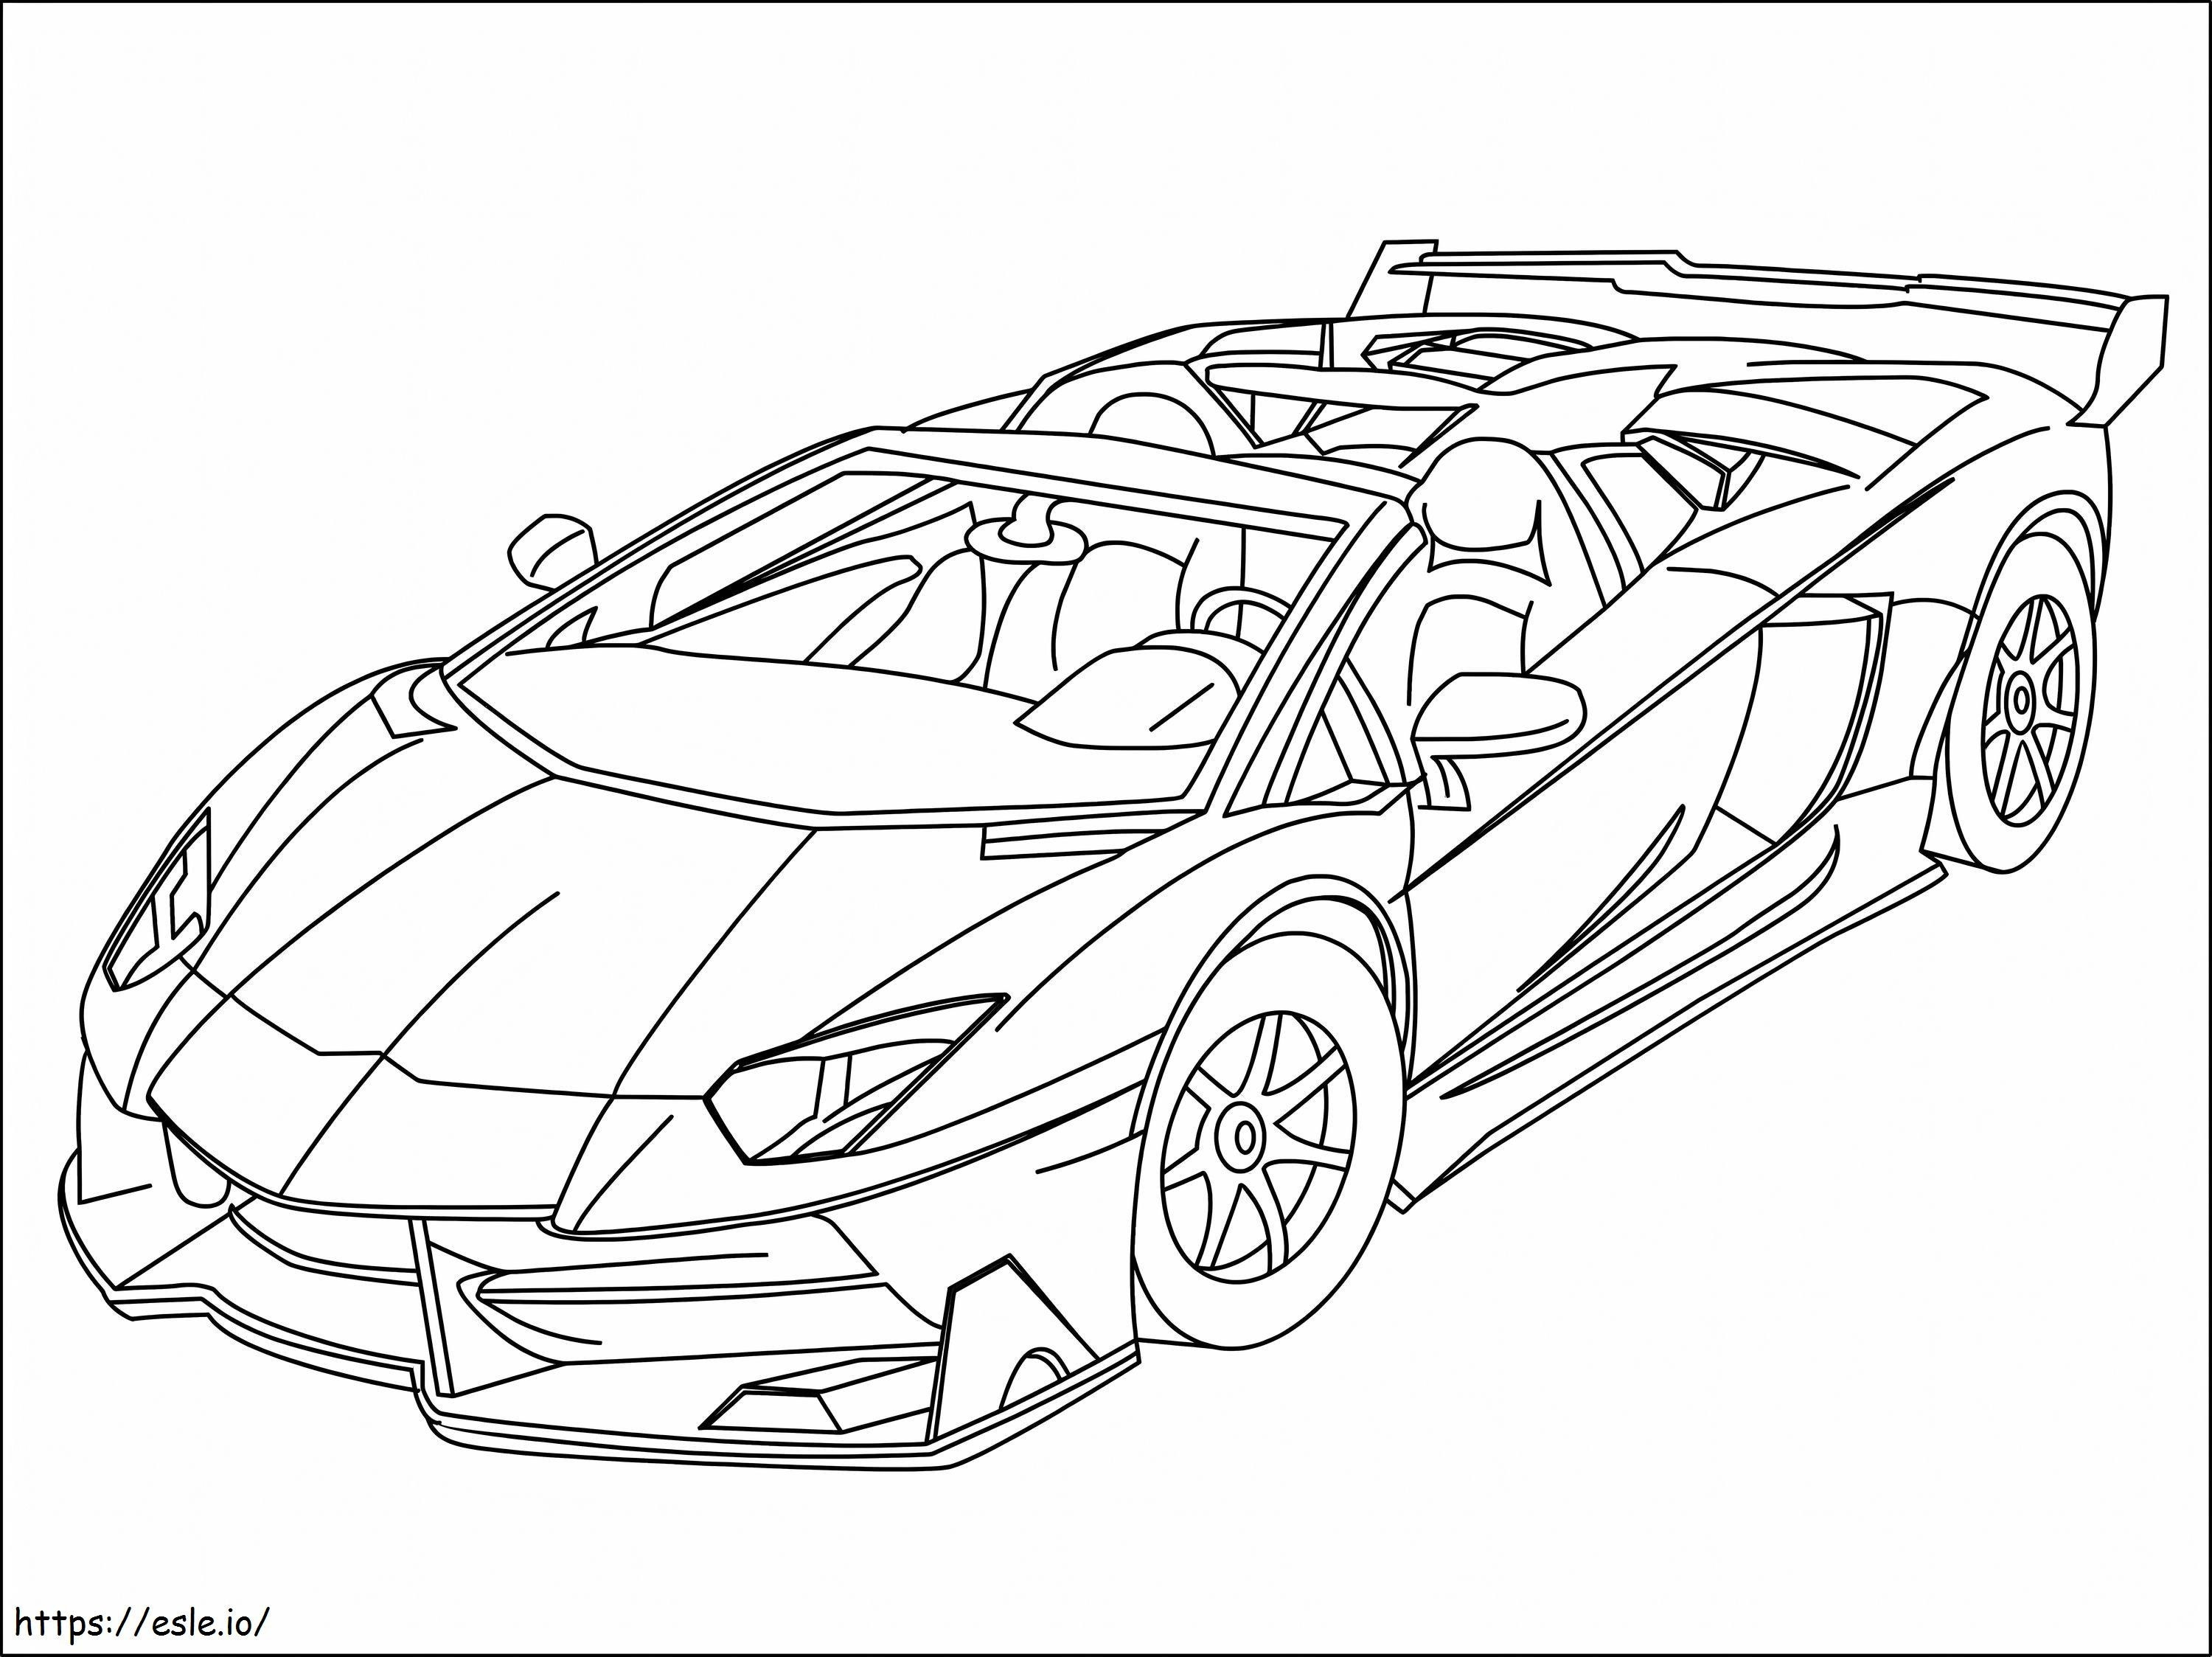 Basic Lamborghini coloring page